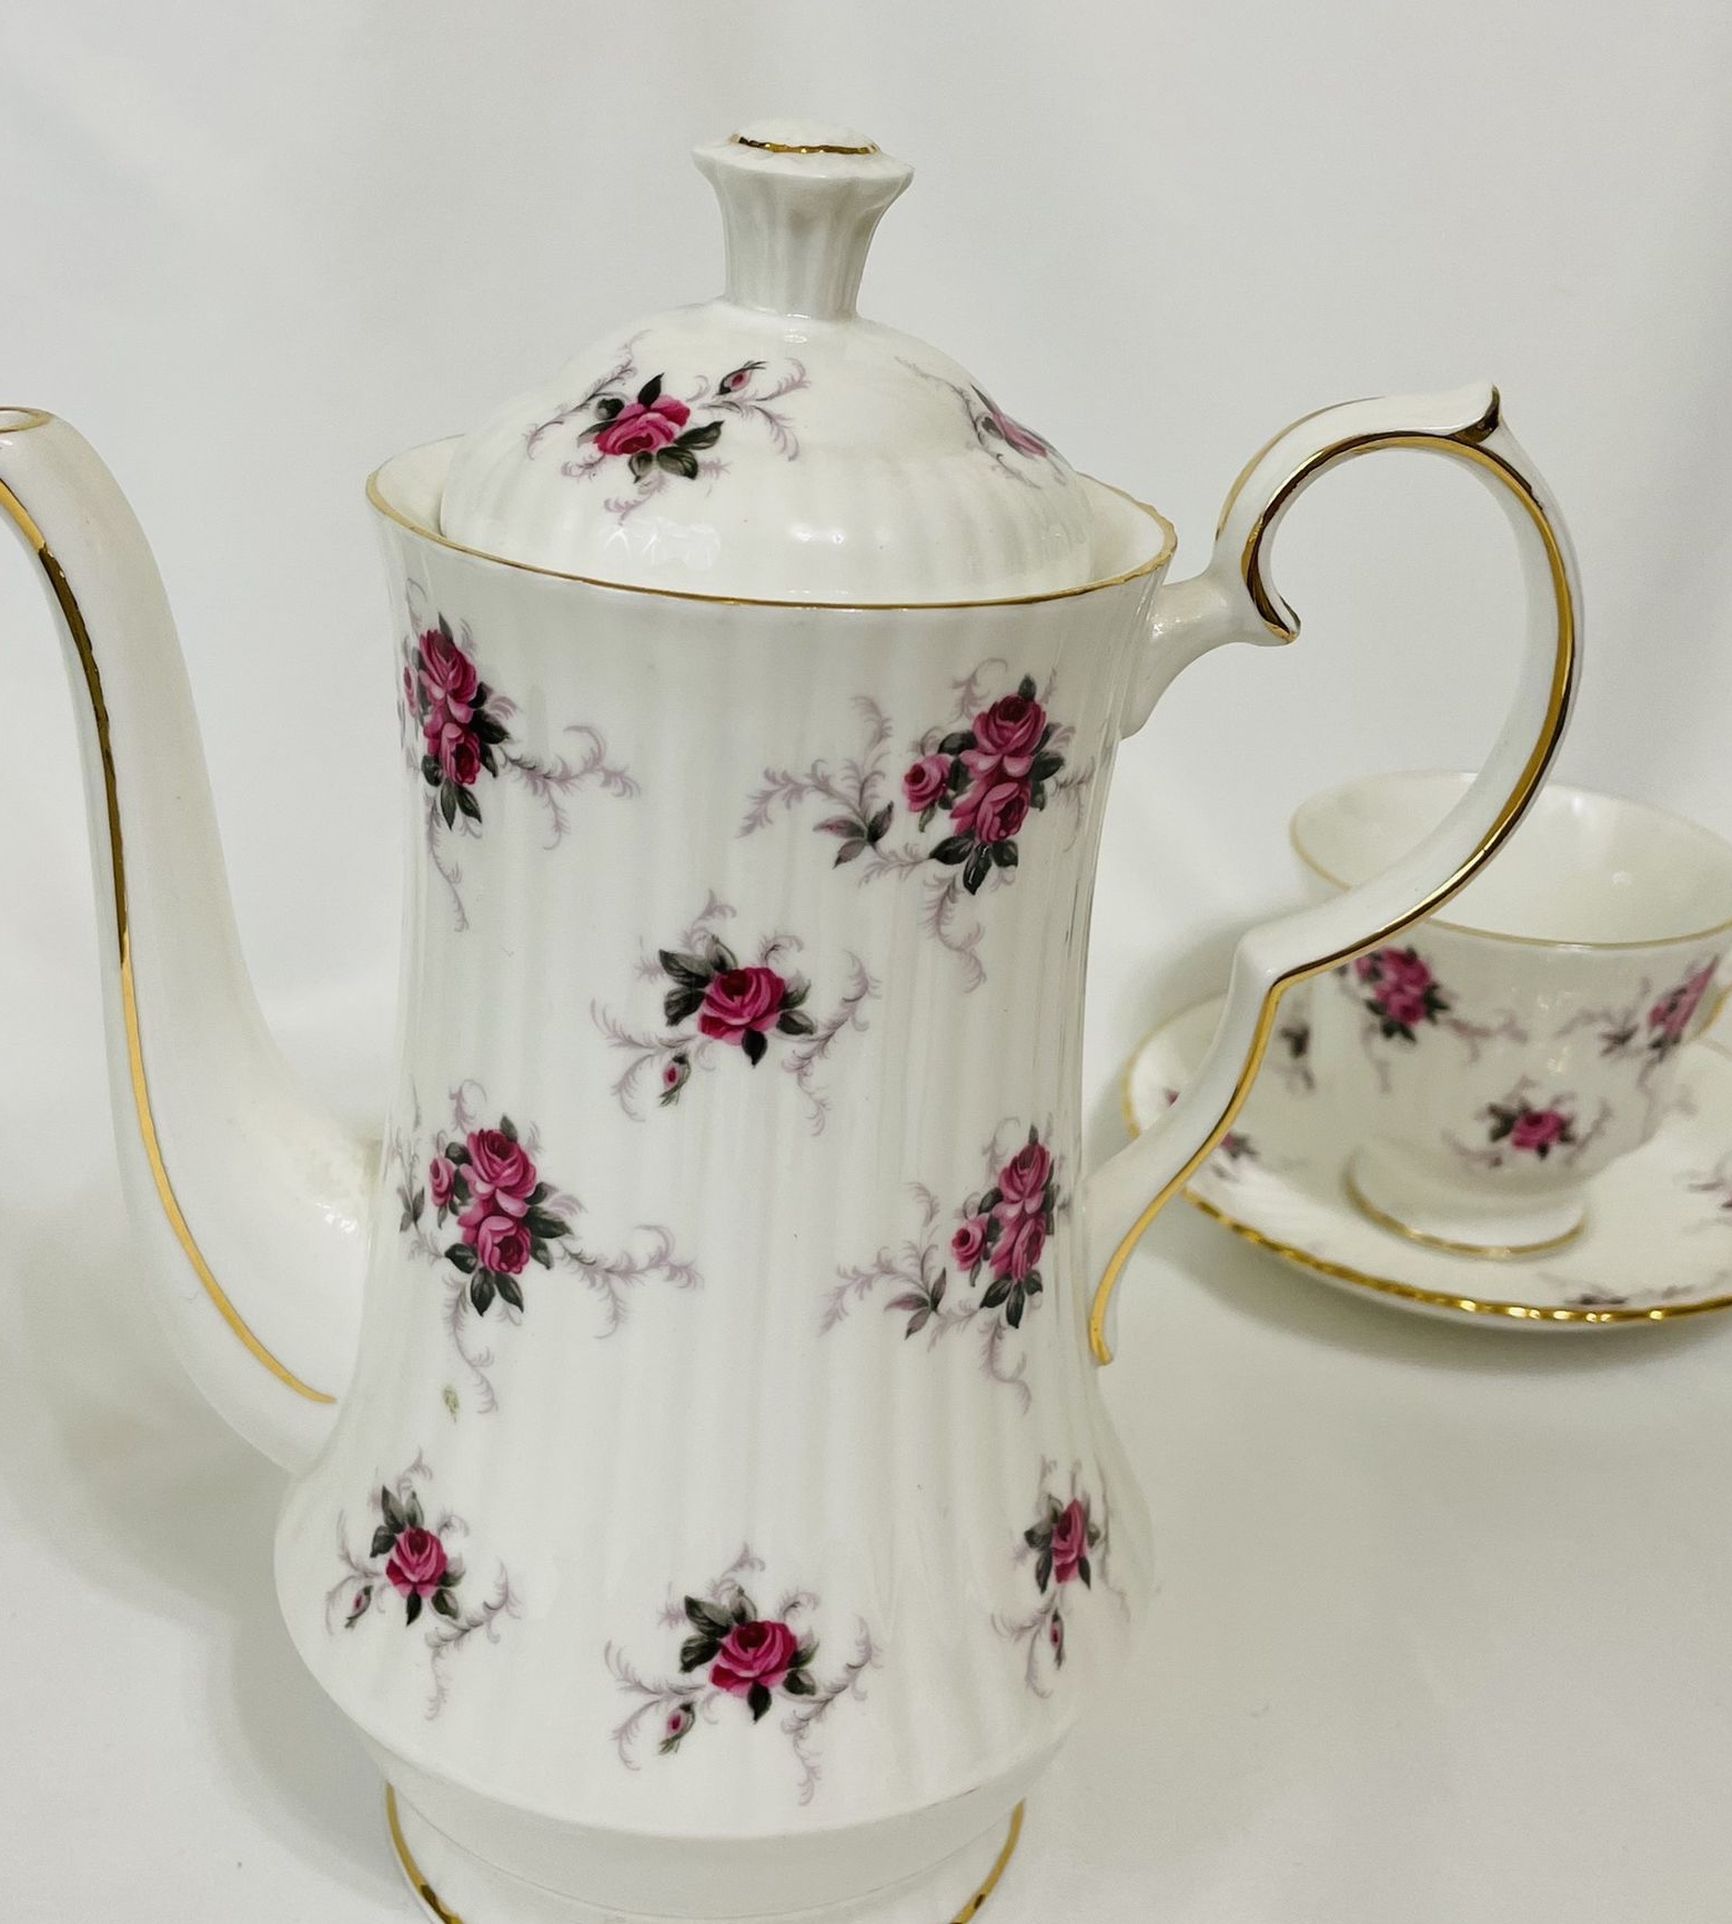 Princess House Bone China Teapot and Teacup from England